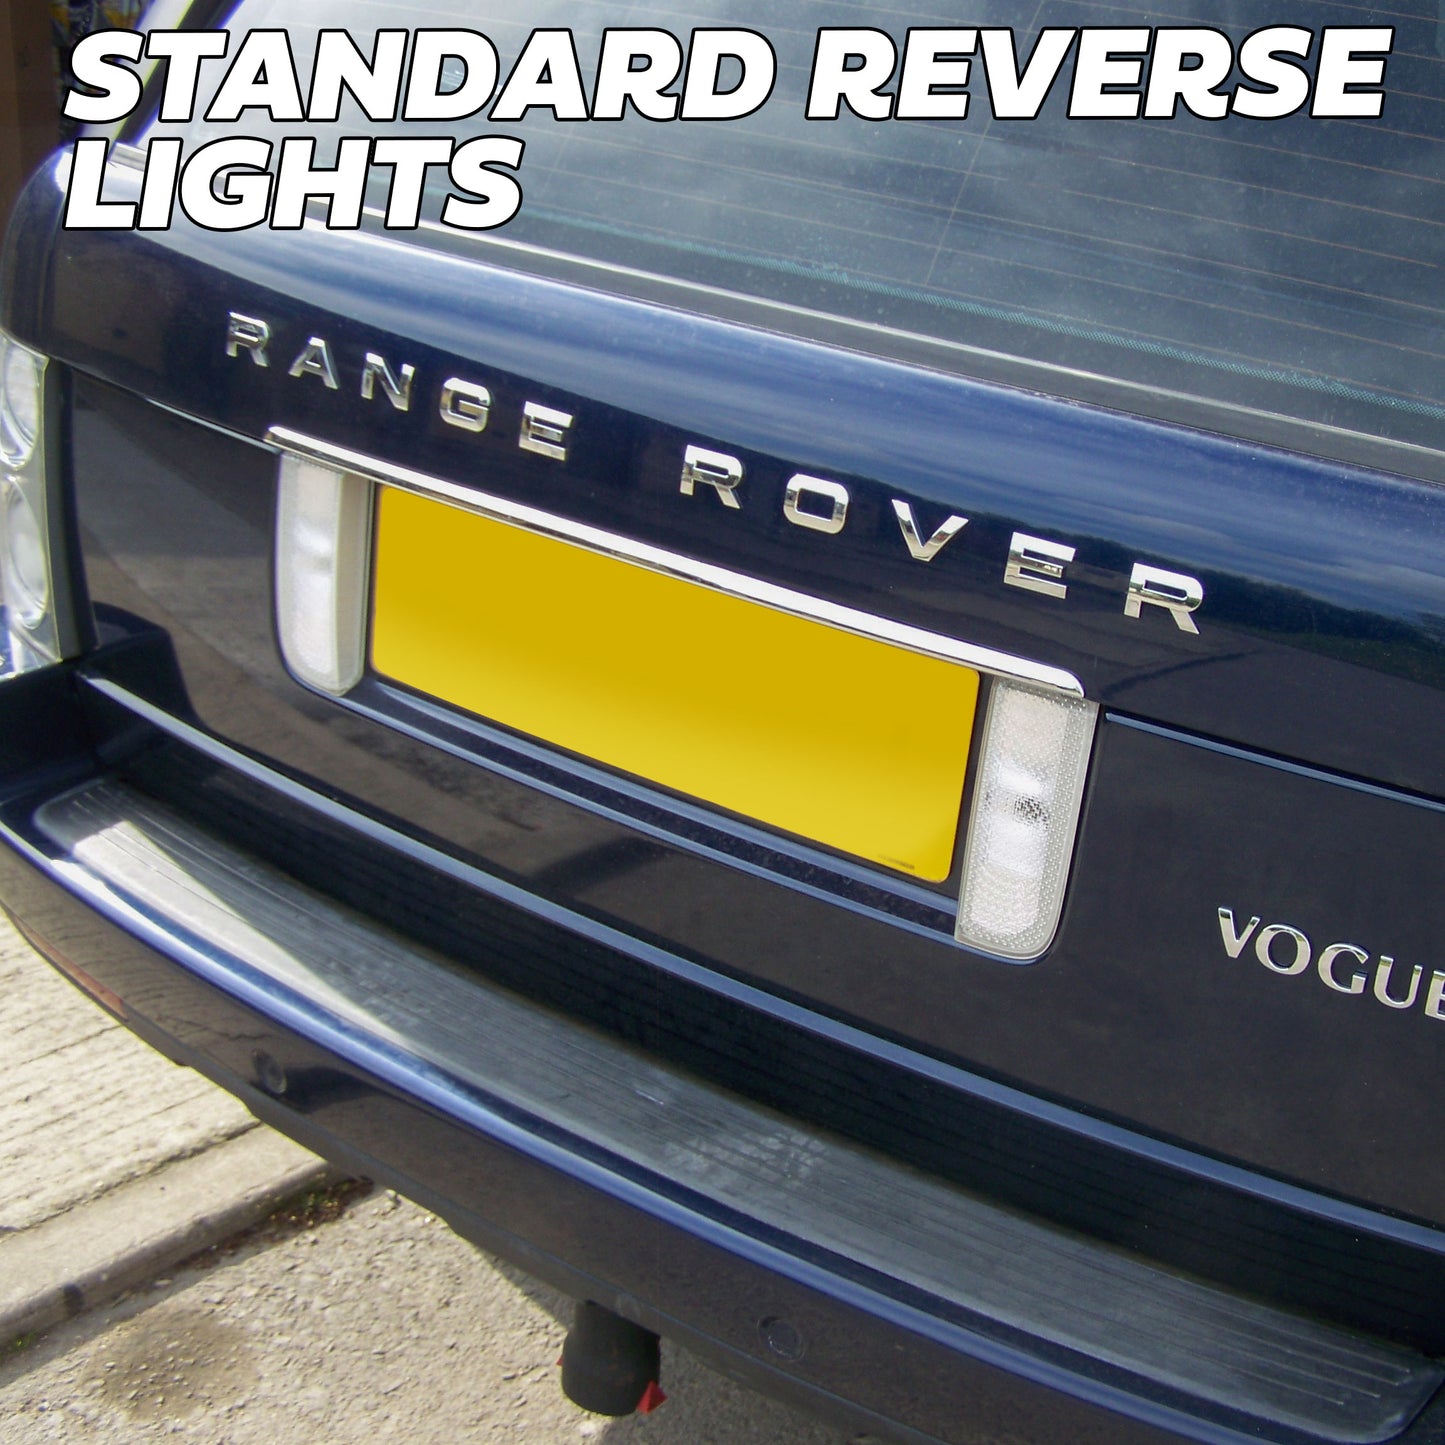 LED Reverse Light Assemblies (Pair) for Range Rover L322 - Clear